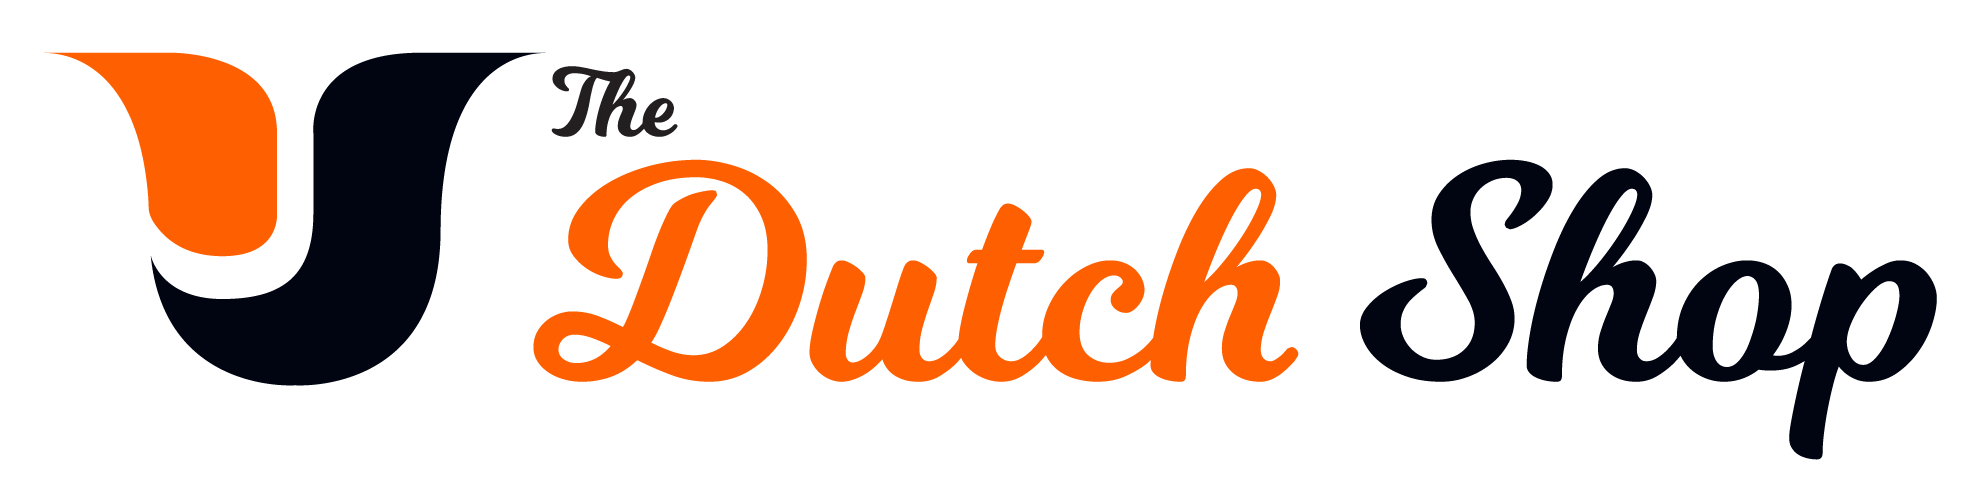 Dutch Shop, The